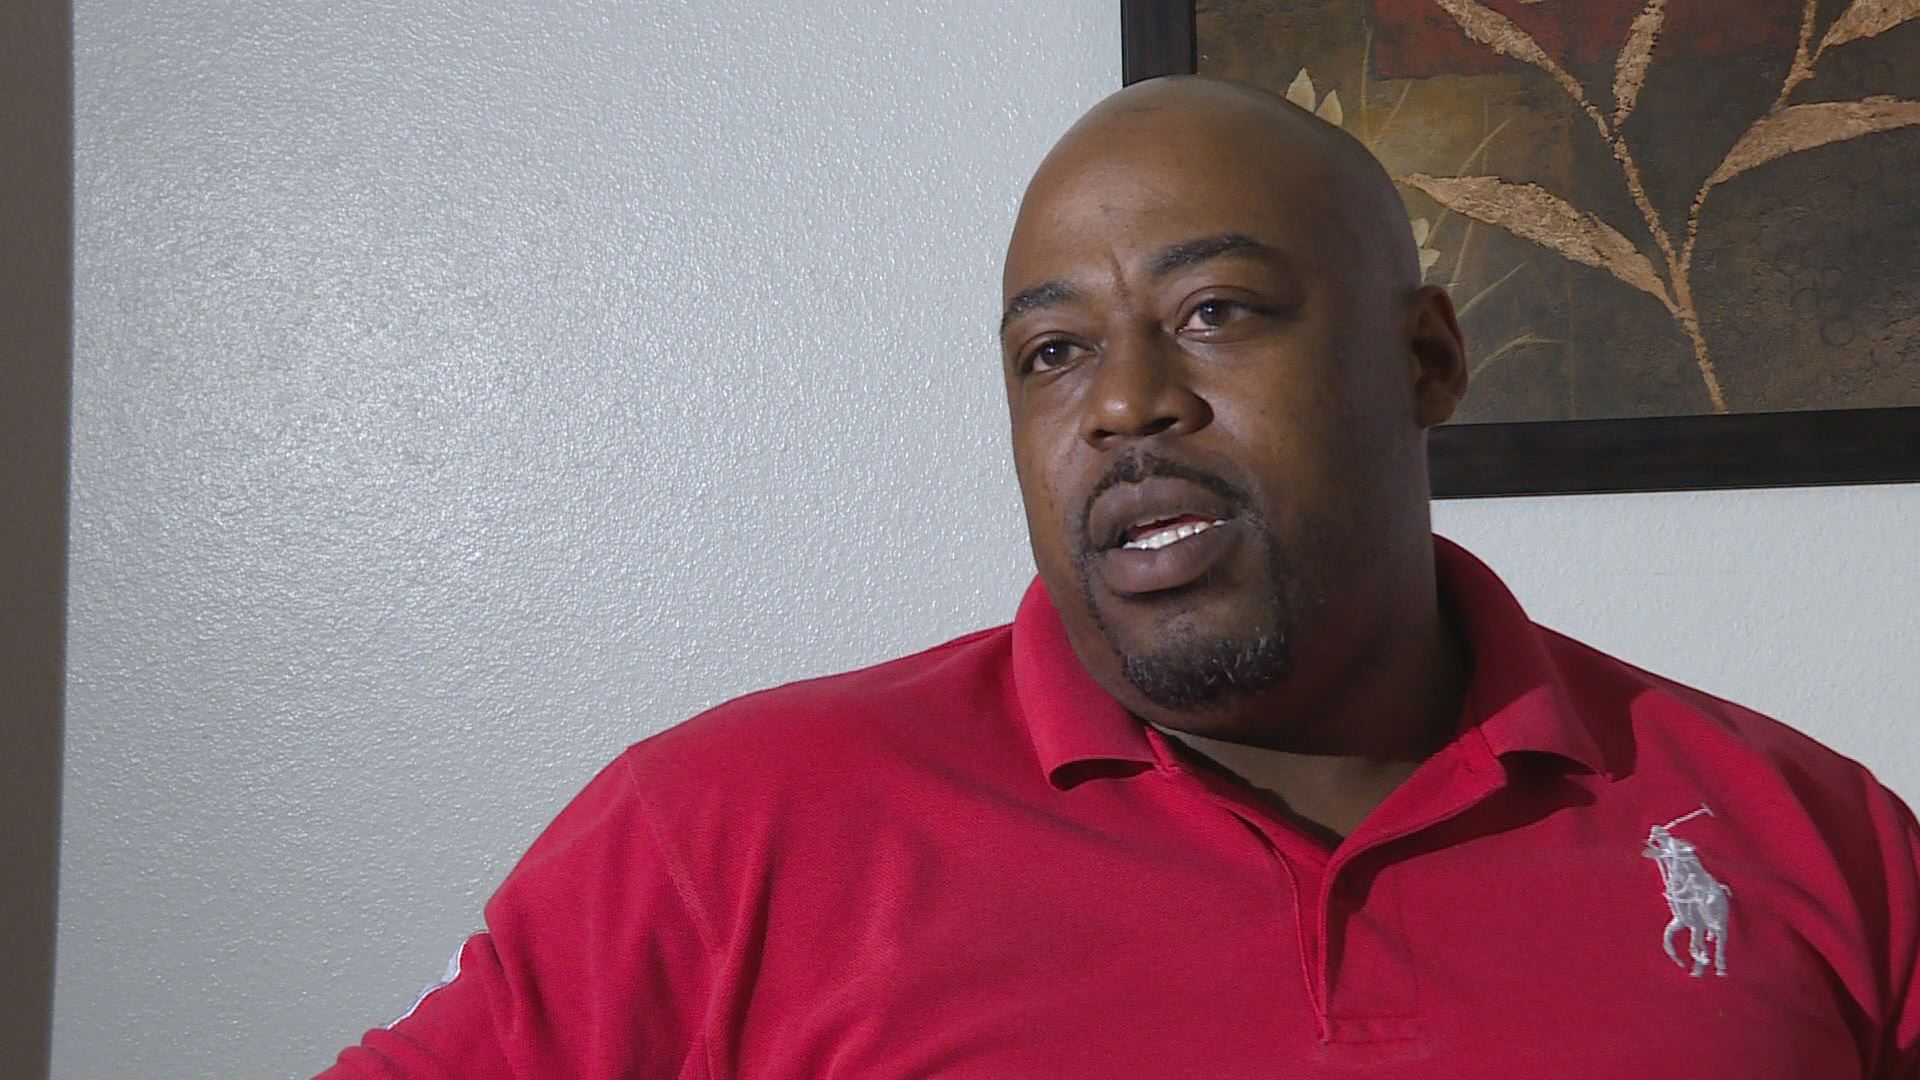 Man hopes for pardon decades after crime